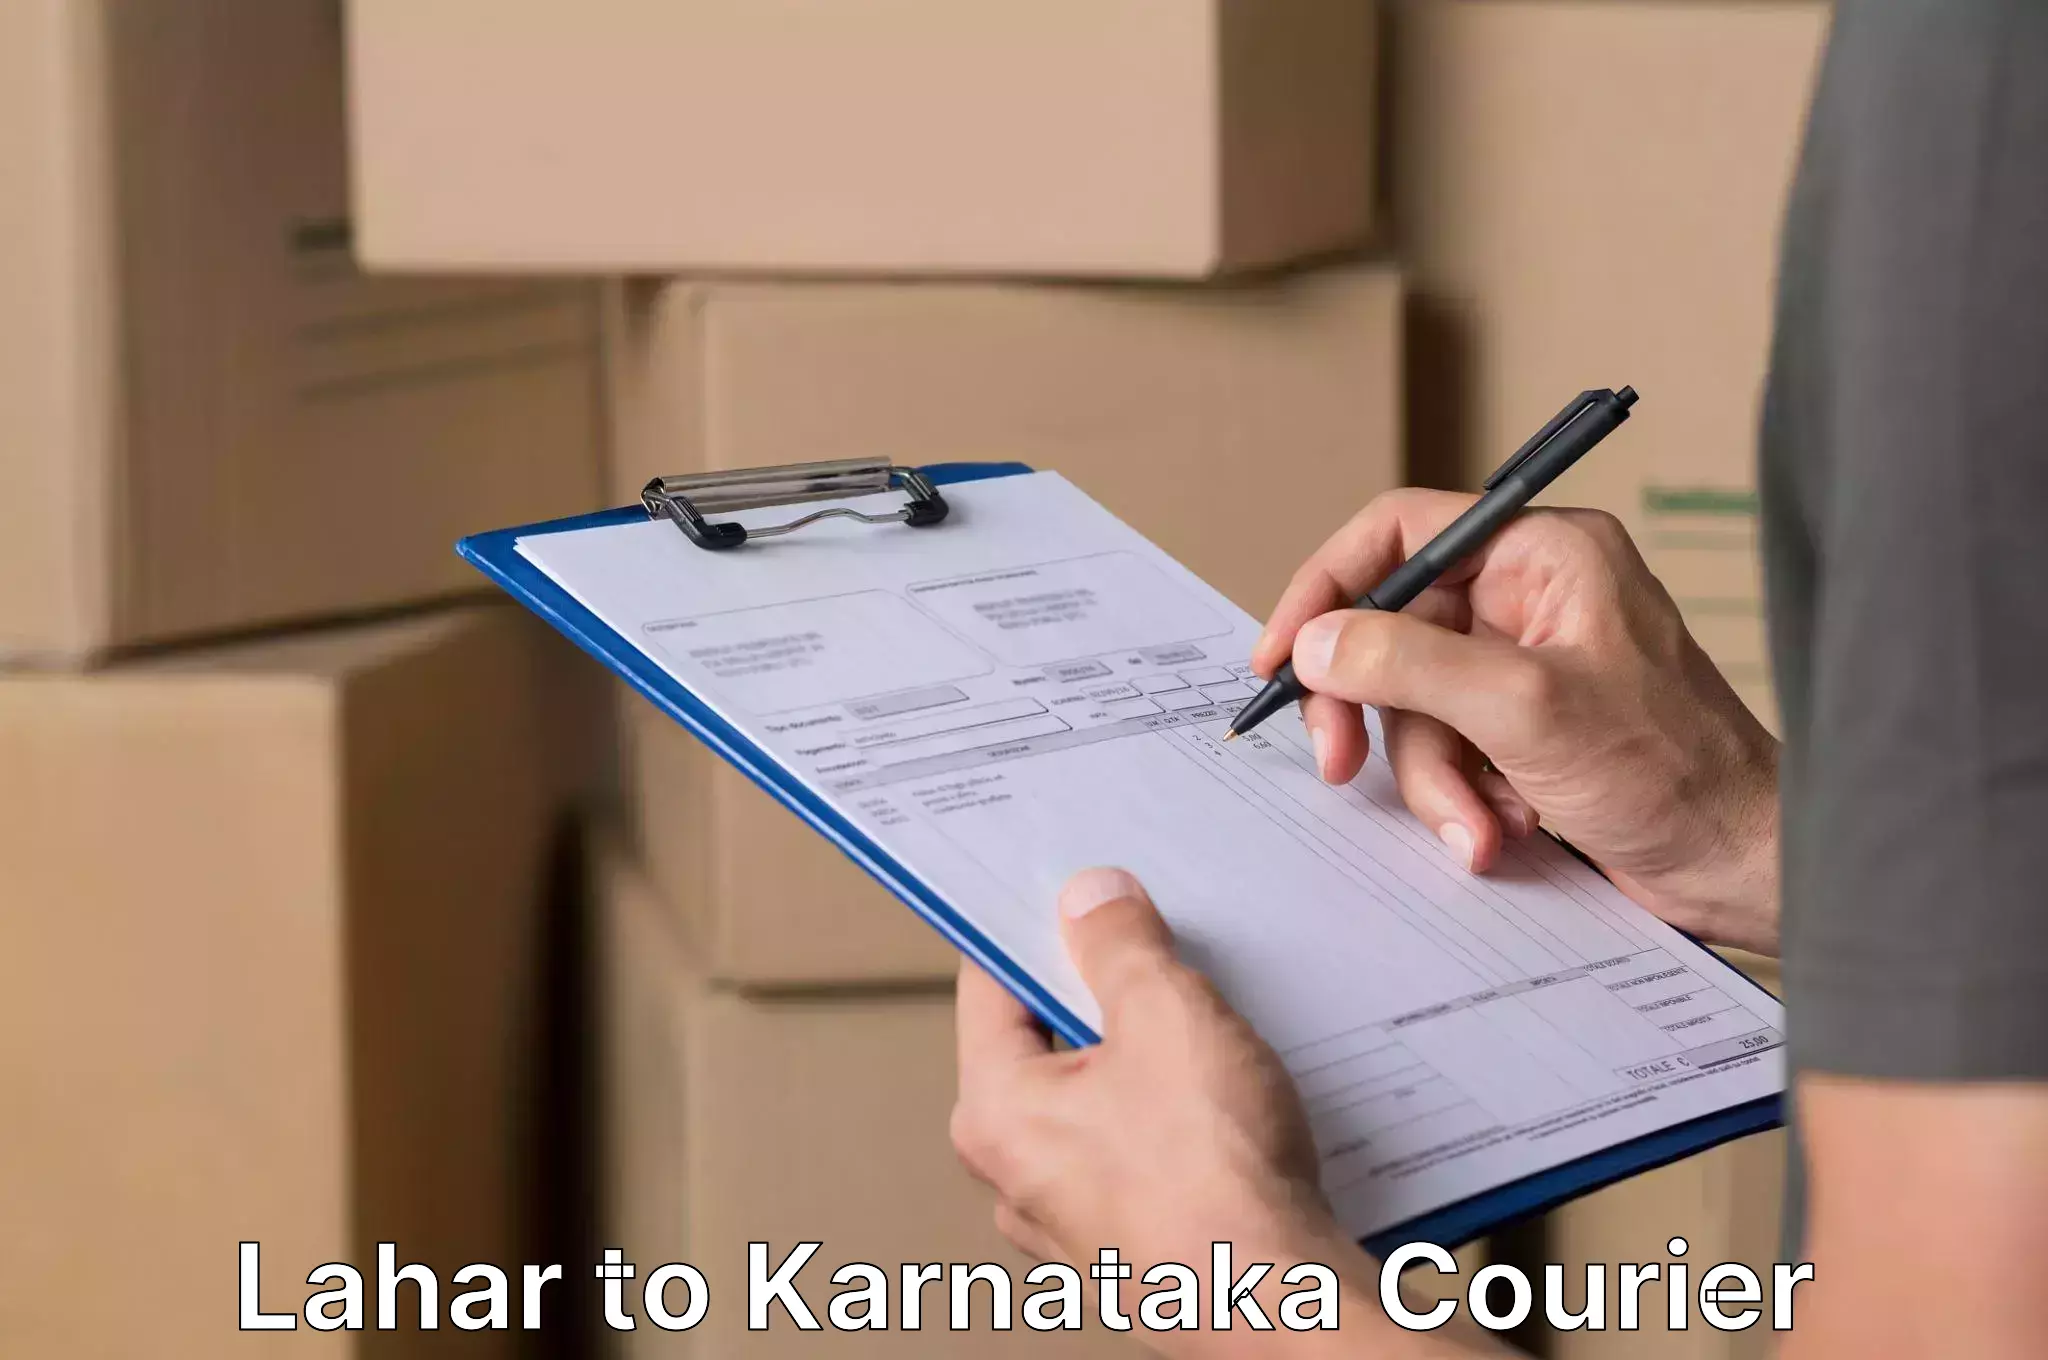 Furniture transport professionals Lahar to Karnataka